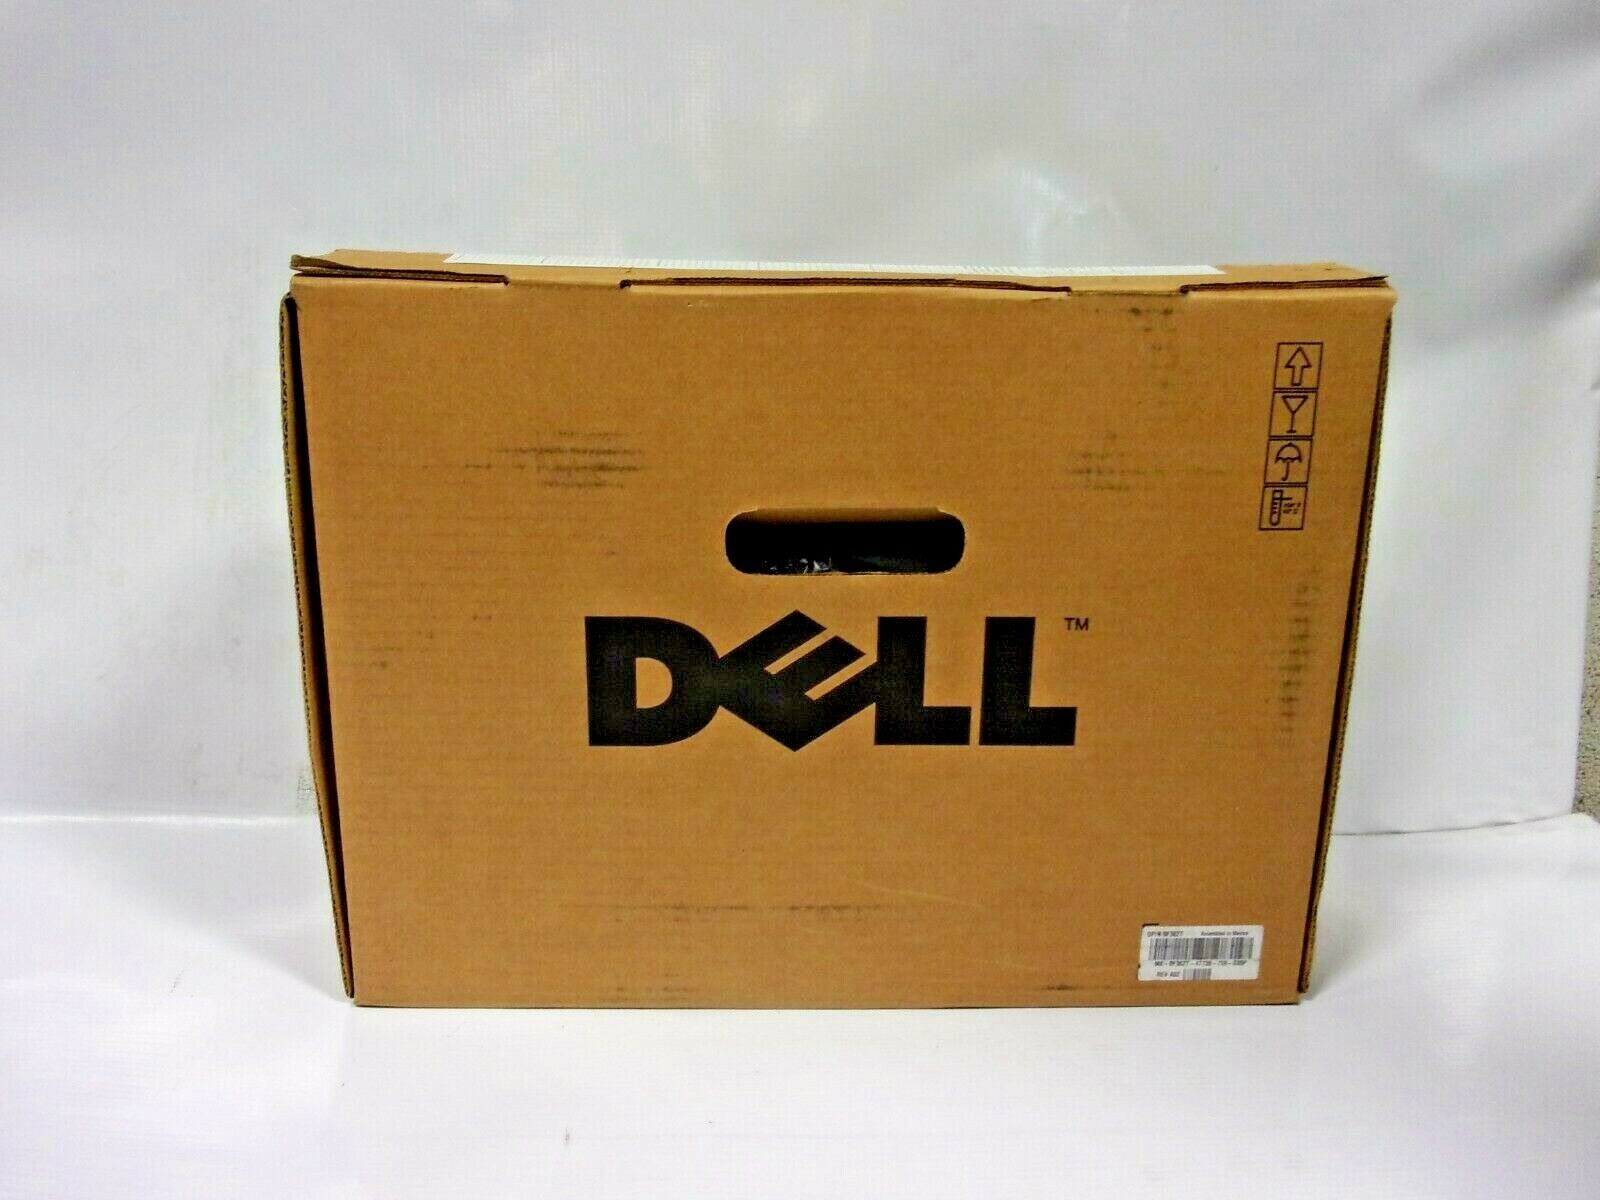  New Genuine Dell K2885 High Yield Black Toner Cartridge for M5200 W5300